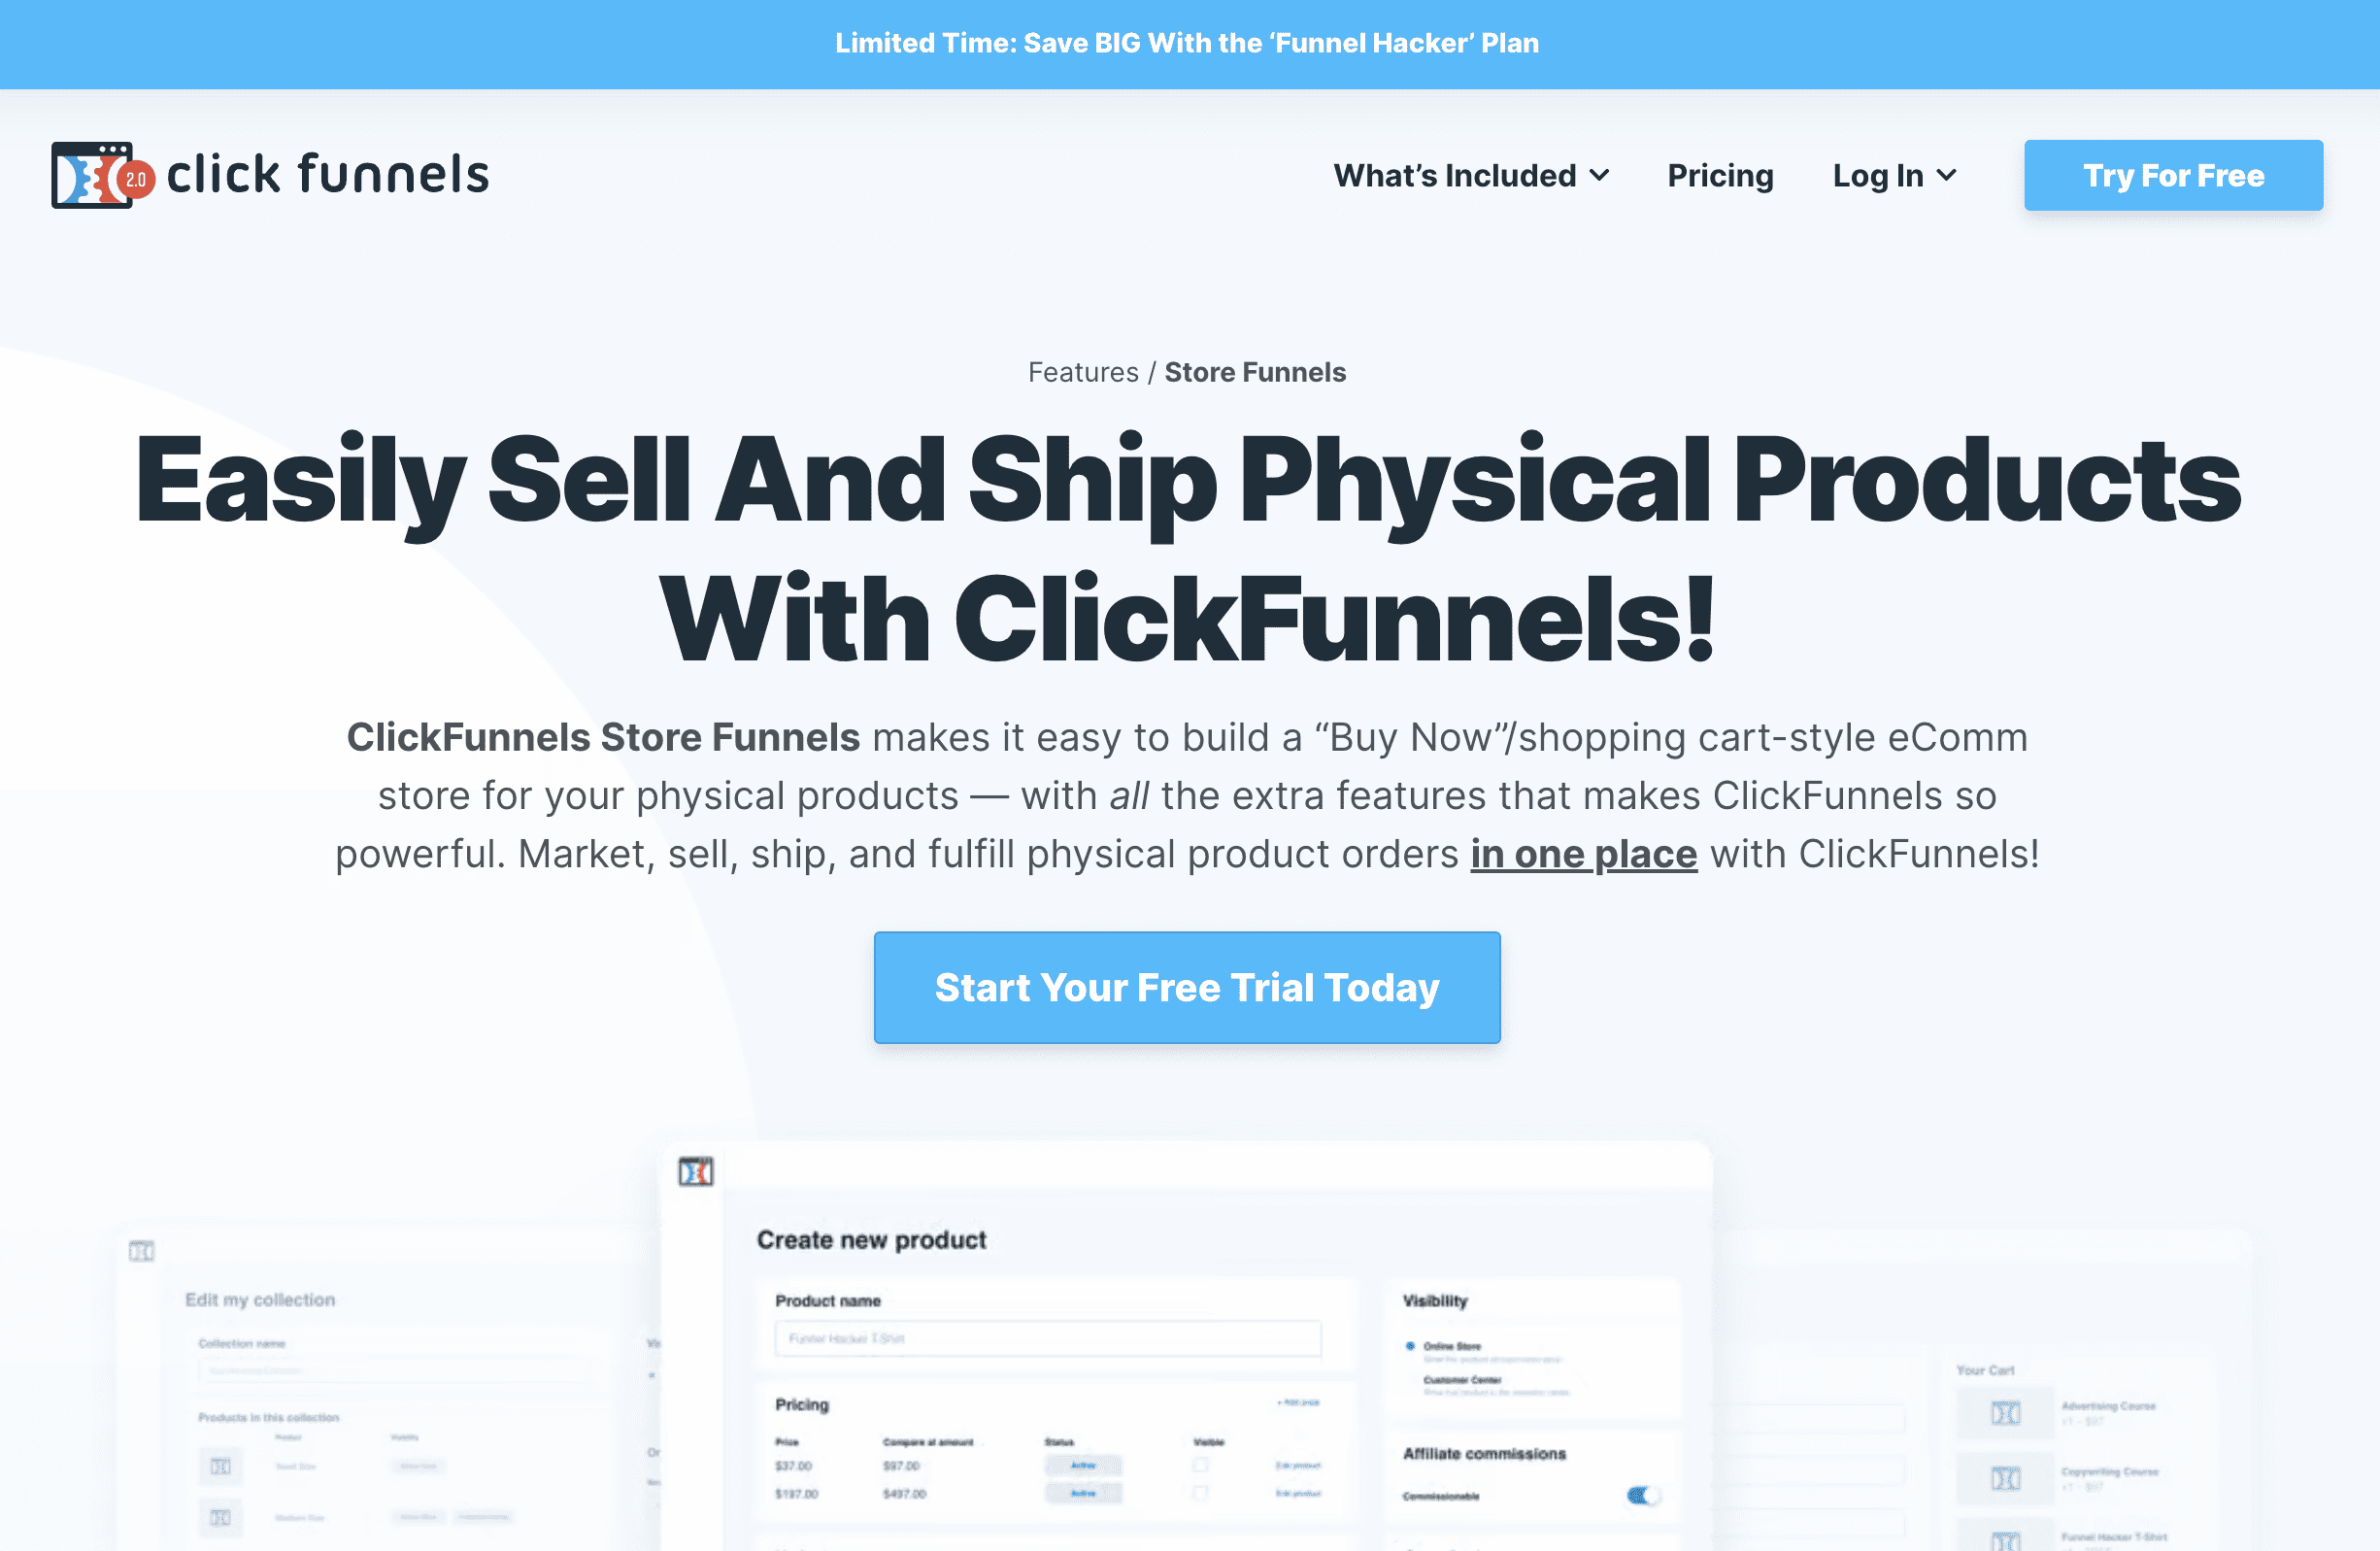 ClickFunnels sales funnel software